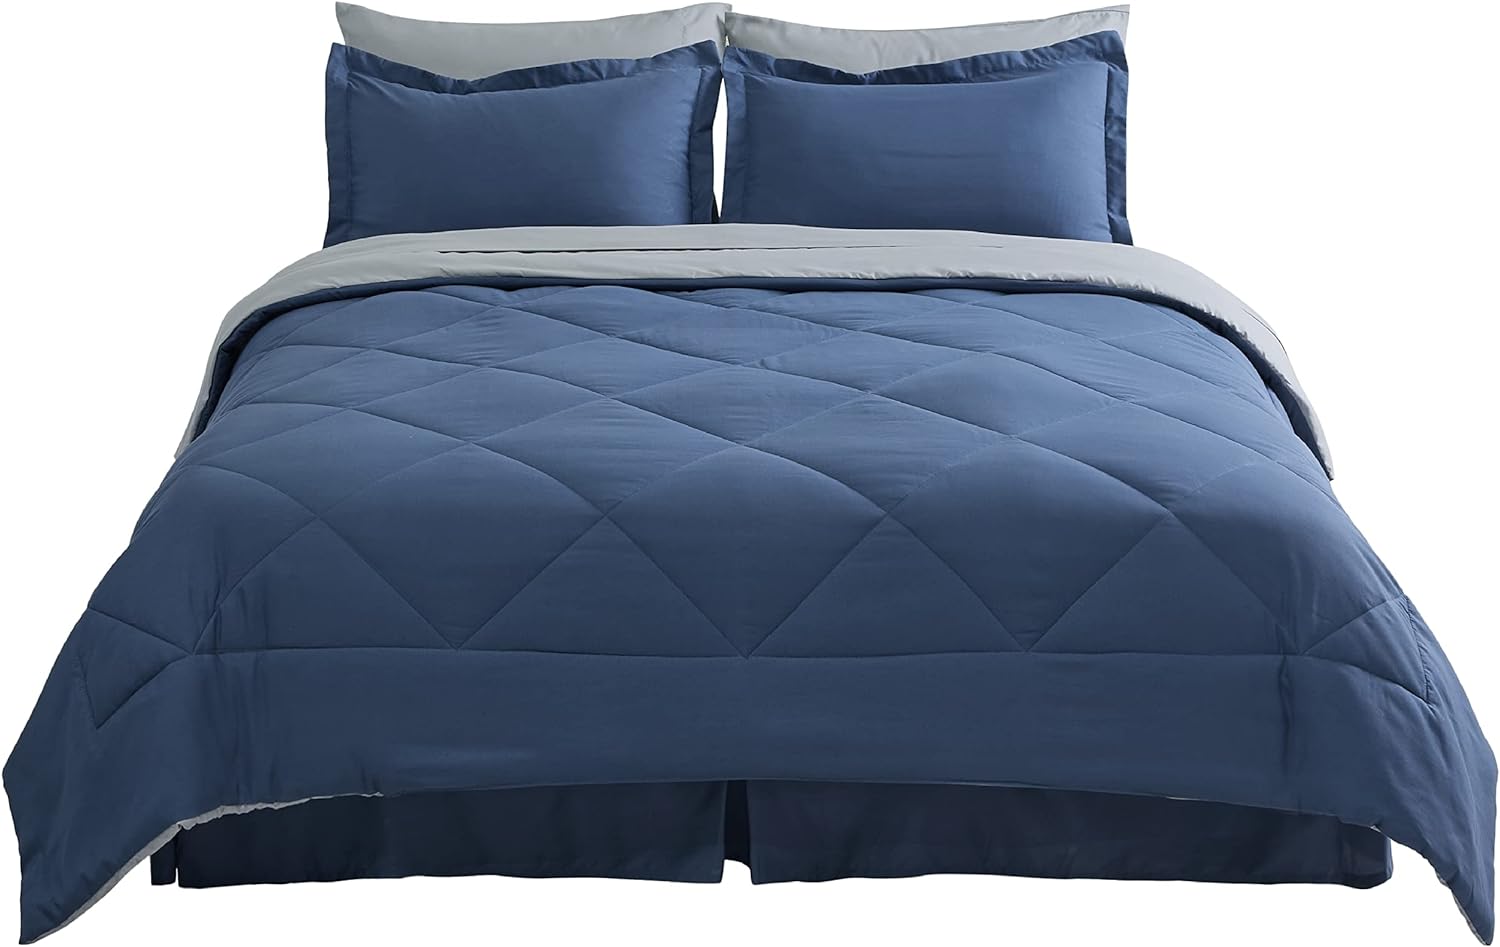 Bedsure Navy Comforter Set Queen Pillowcases & Shams 8 Pieces Reversible Navy Bed in A Bag Queen Bed Sets with Comforters Sheets Navy Queen Bedding Sets